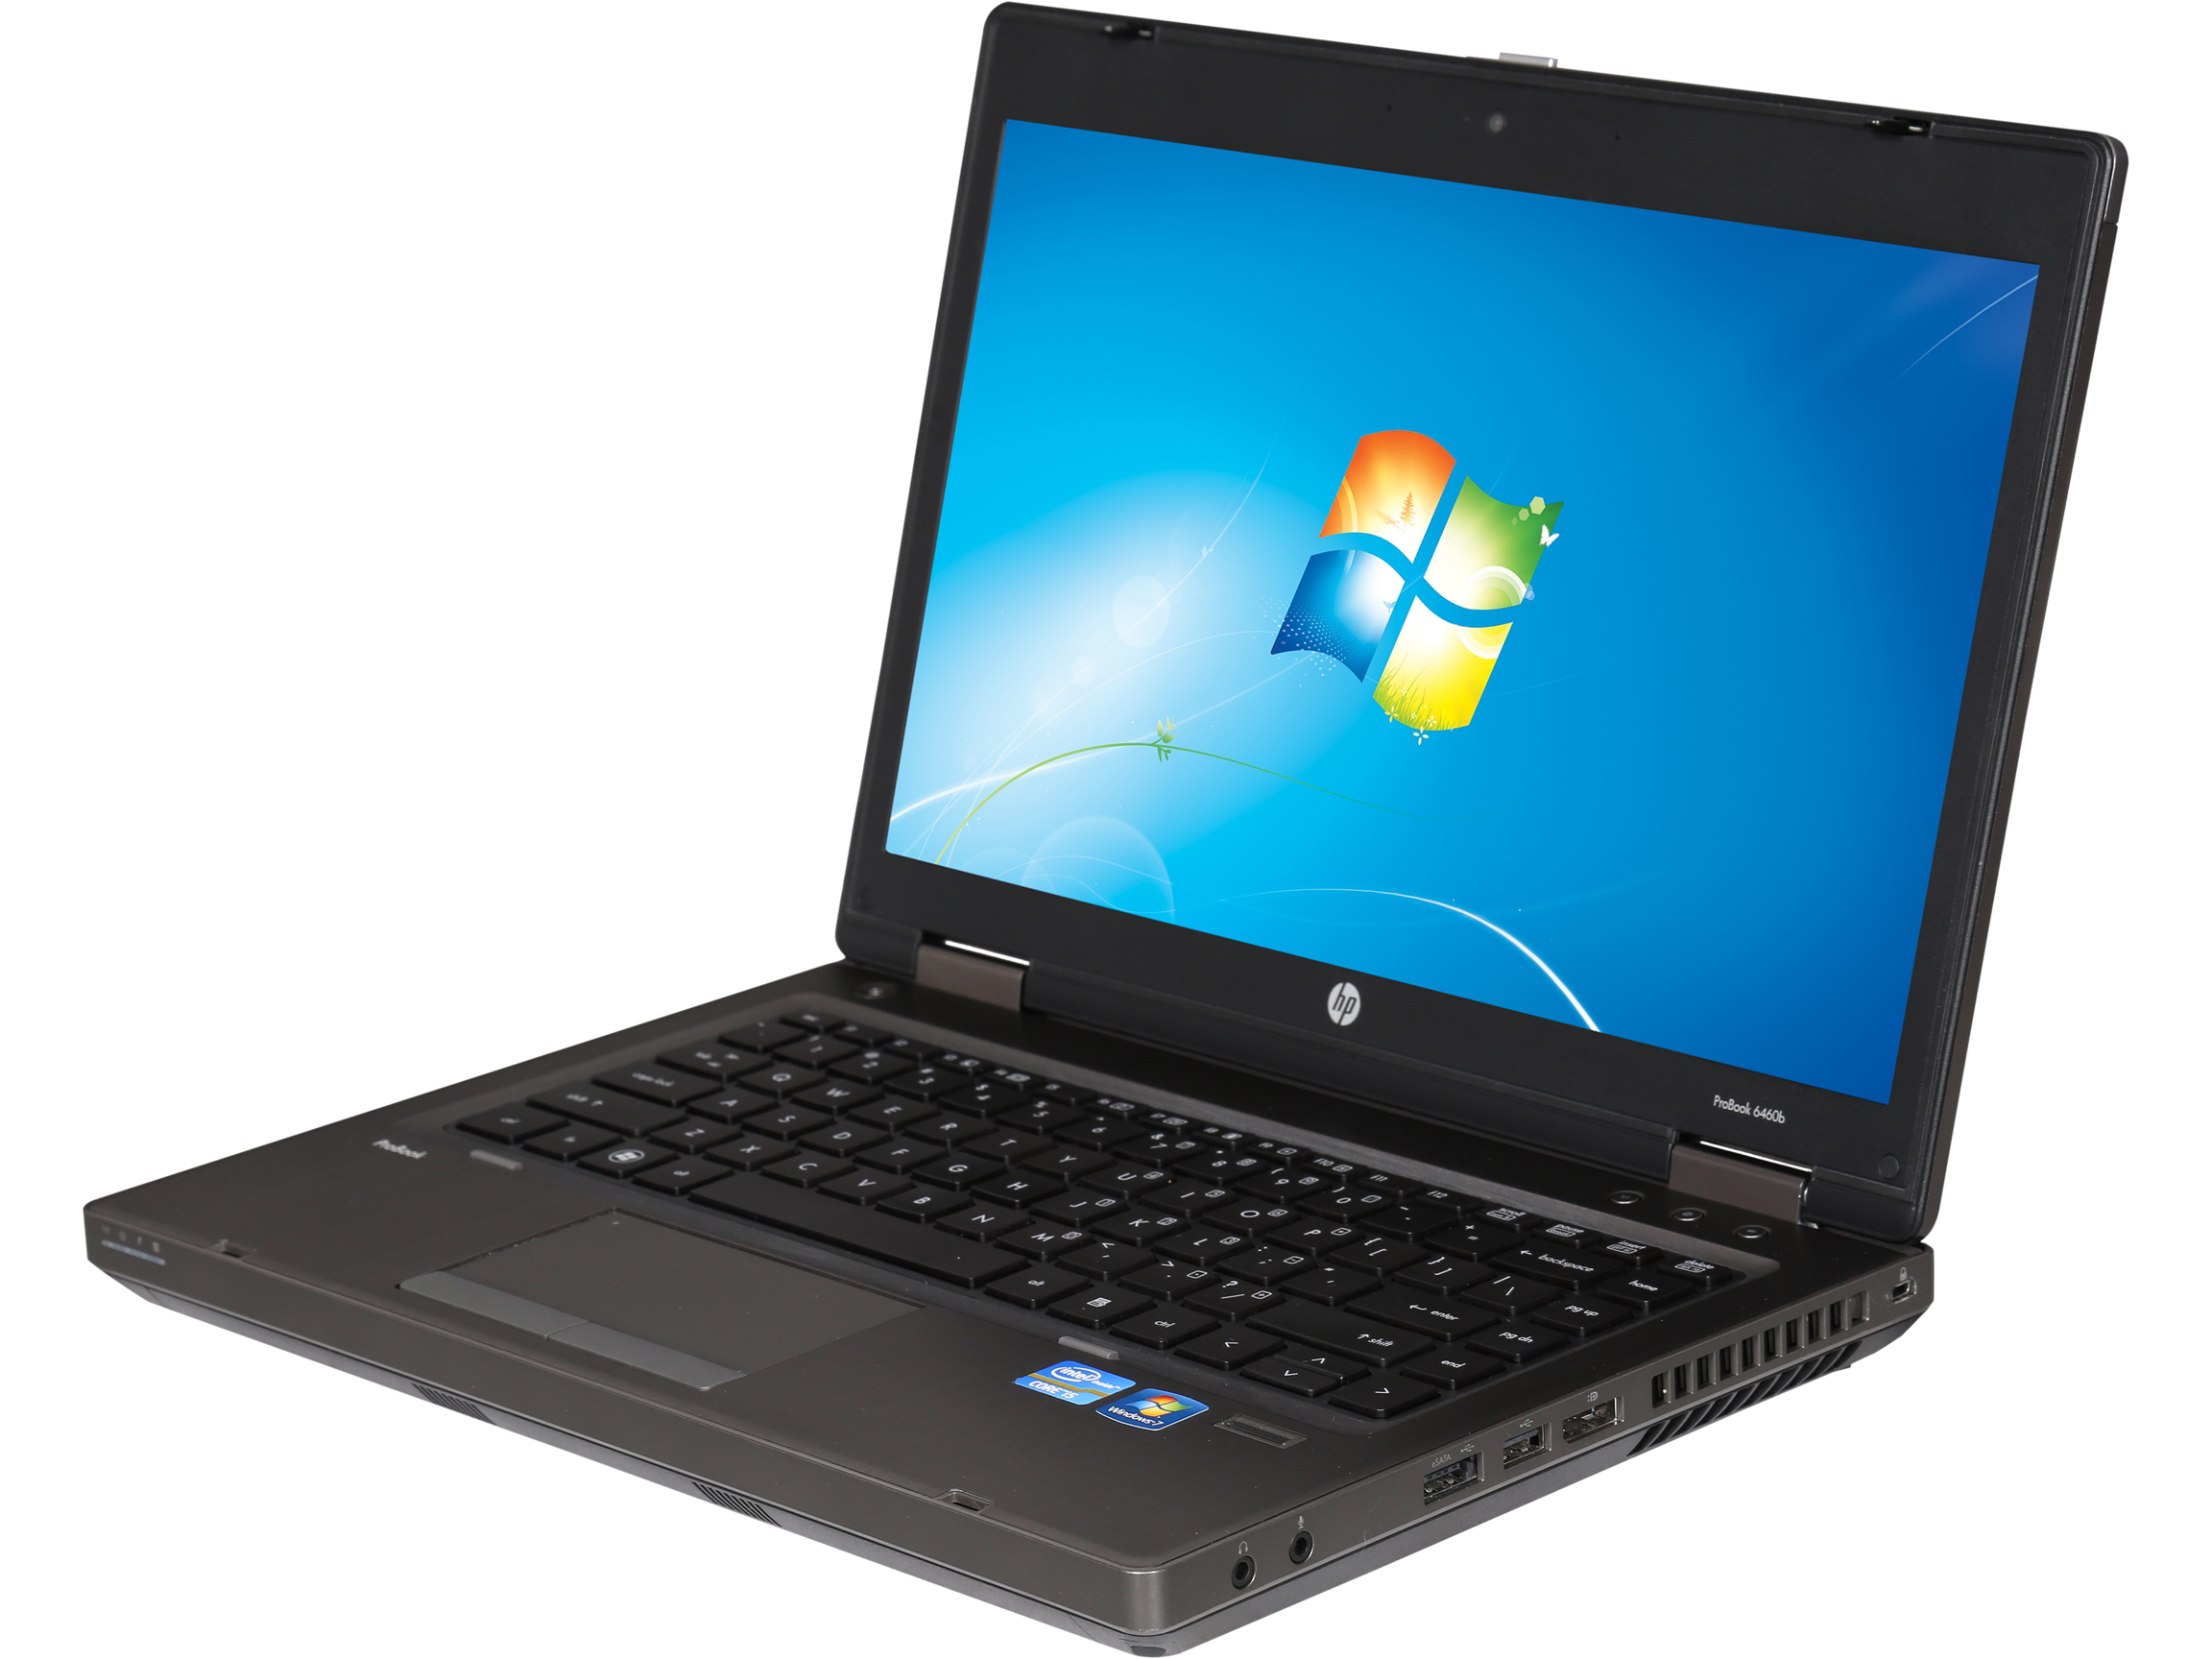 Refurbished HP Laptop 6460 Intel Core i5 2nd Gen 2520M (2.50 GHz) 4 GB Memory 128 GB SSD 14.0" Windows 7 Professional 64 Bit